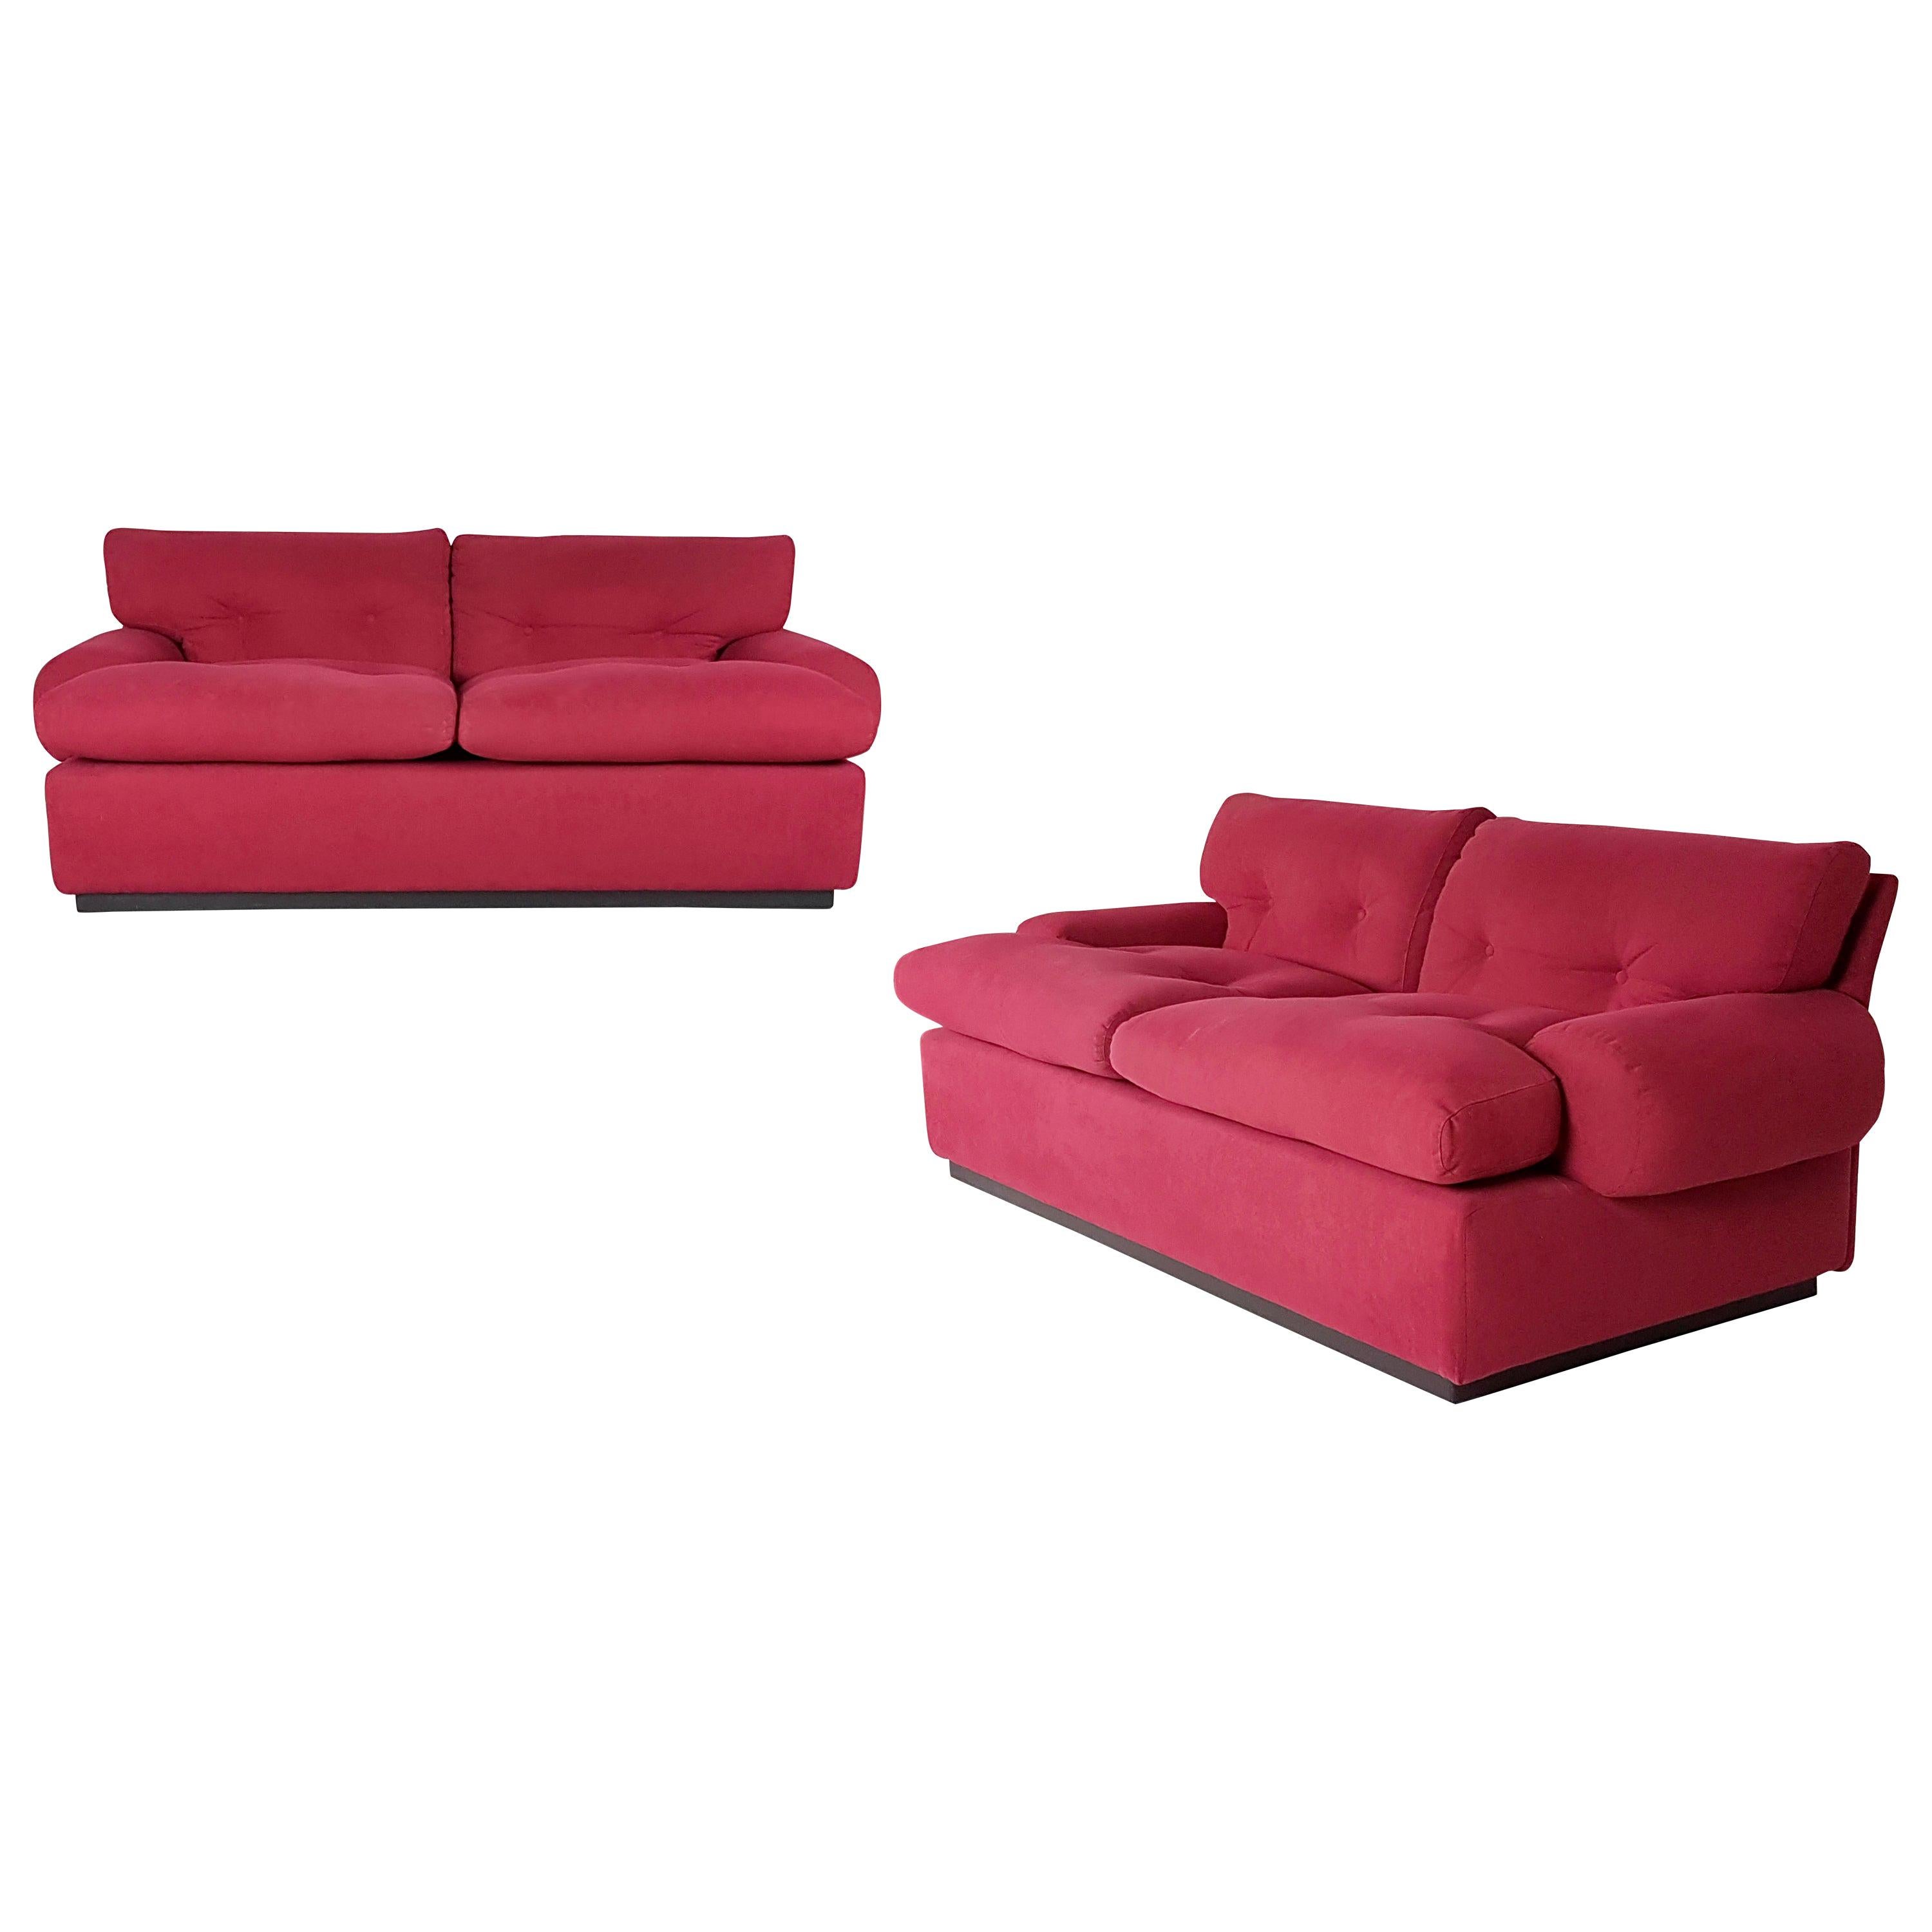 Ein Paar Alcantara Crimson & Wood 2-Sitz-Sofa aus den 1960er Jahren, Osvaldo Borsani zugeschrieben